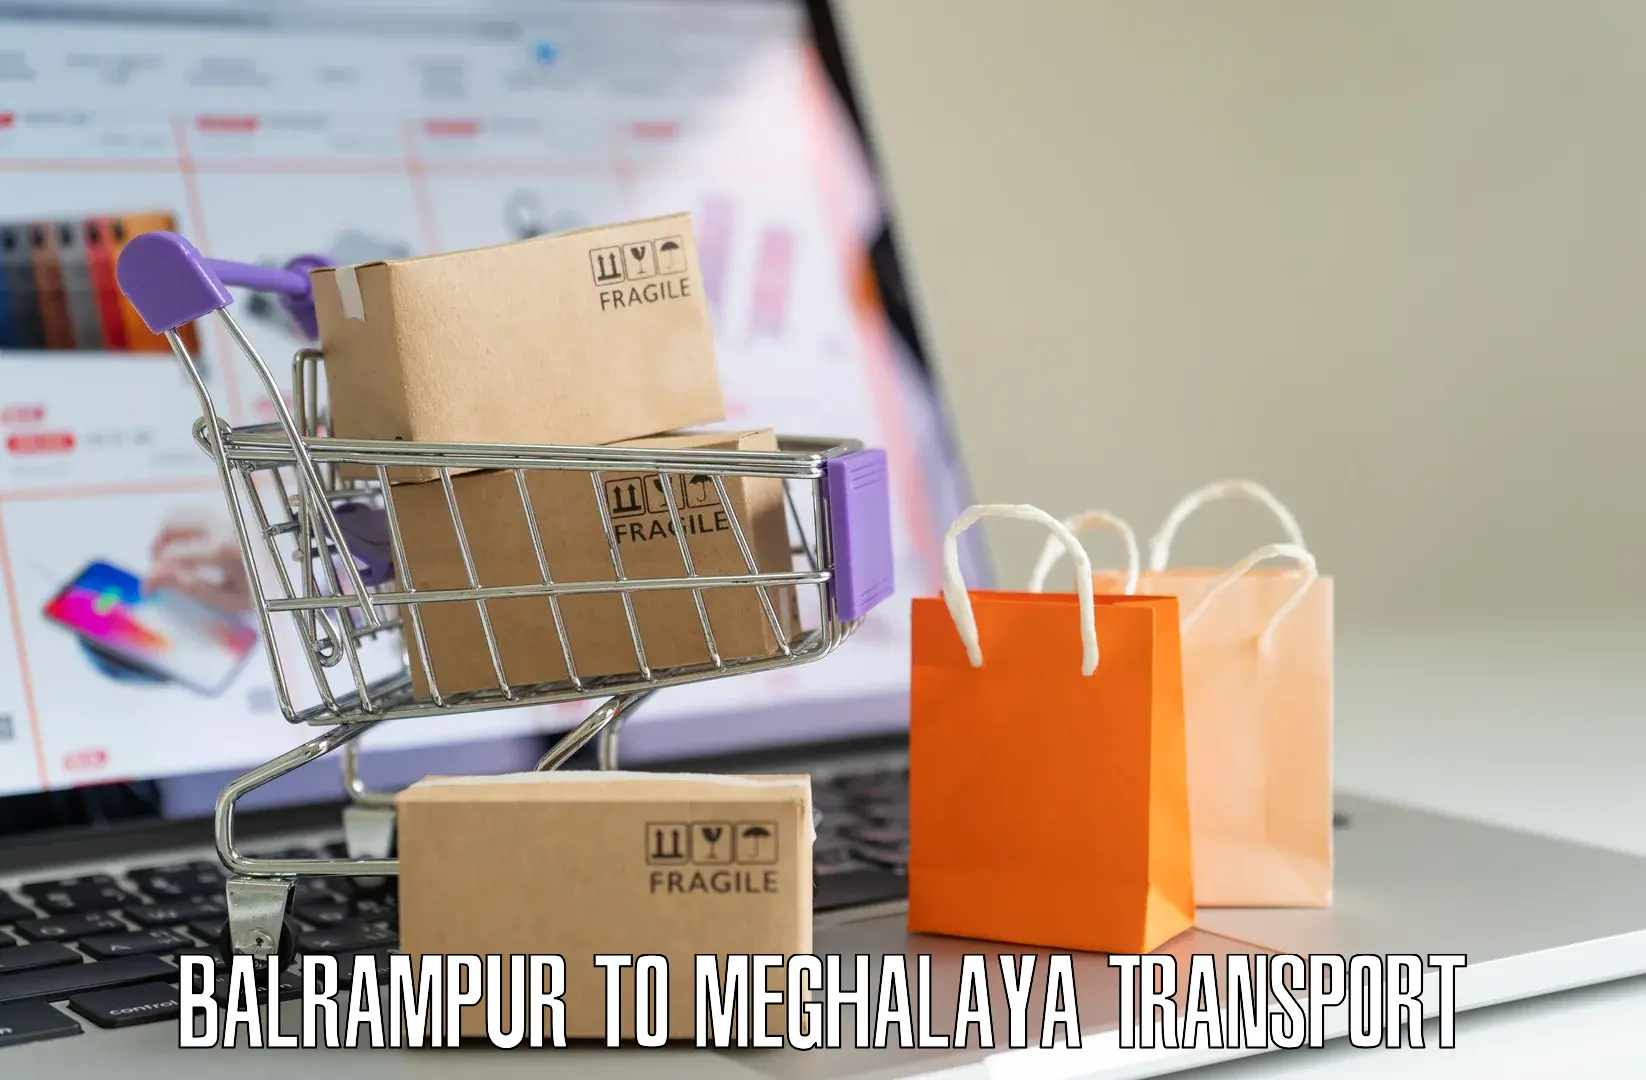 Cycle transportation service Balrampur to Meghalaya